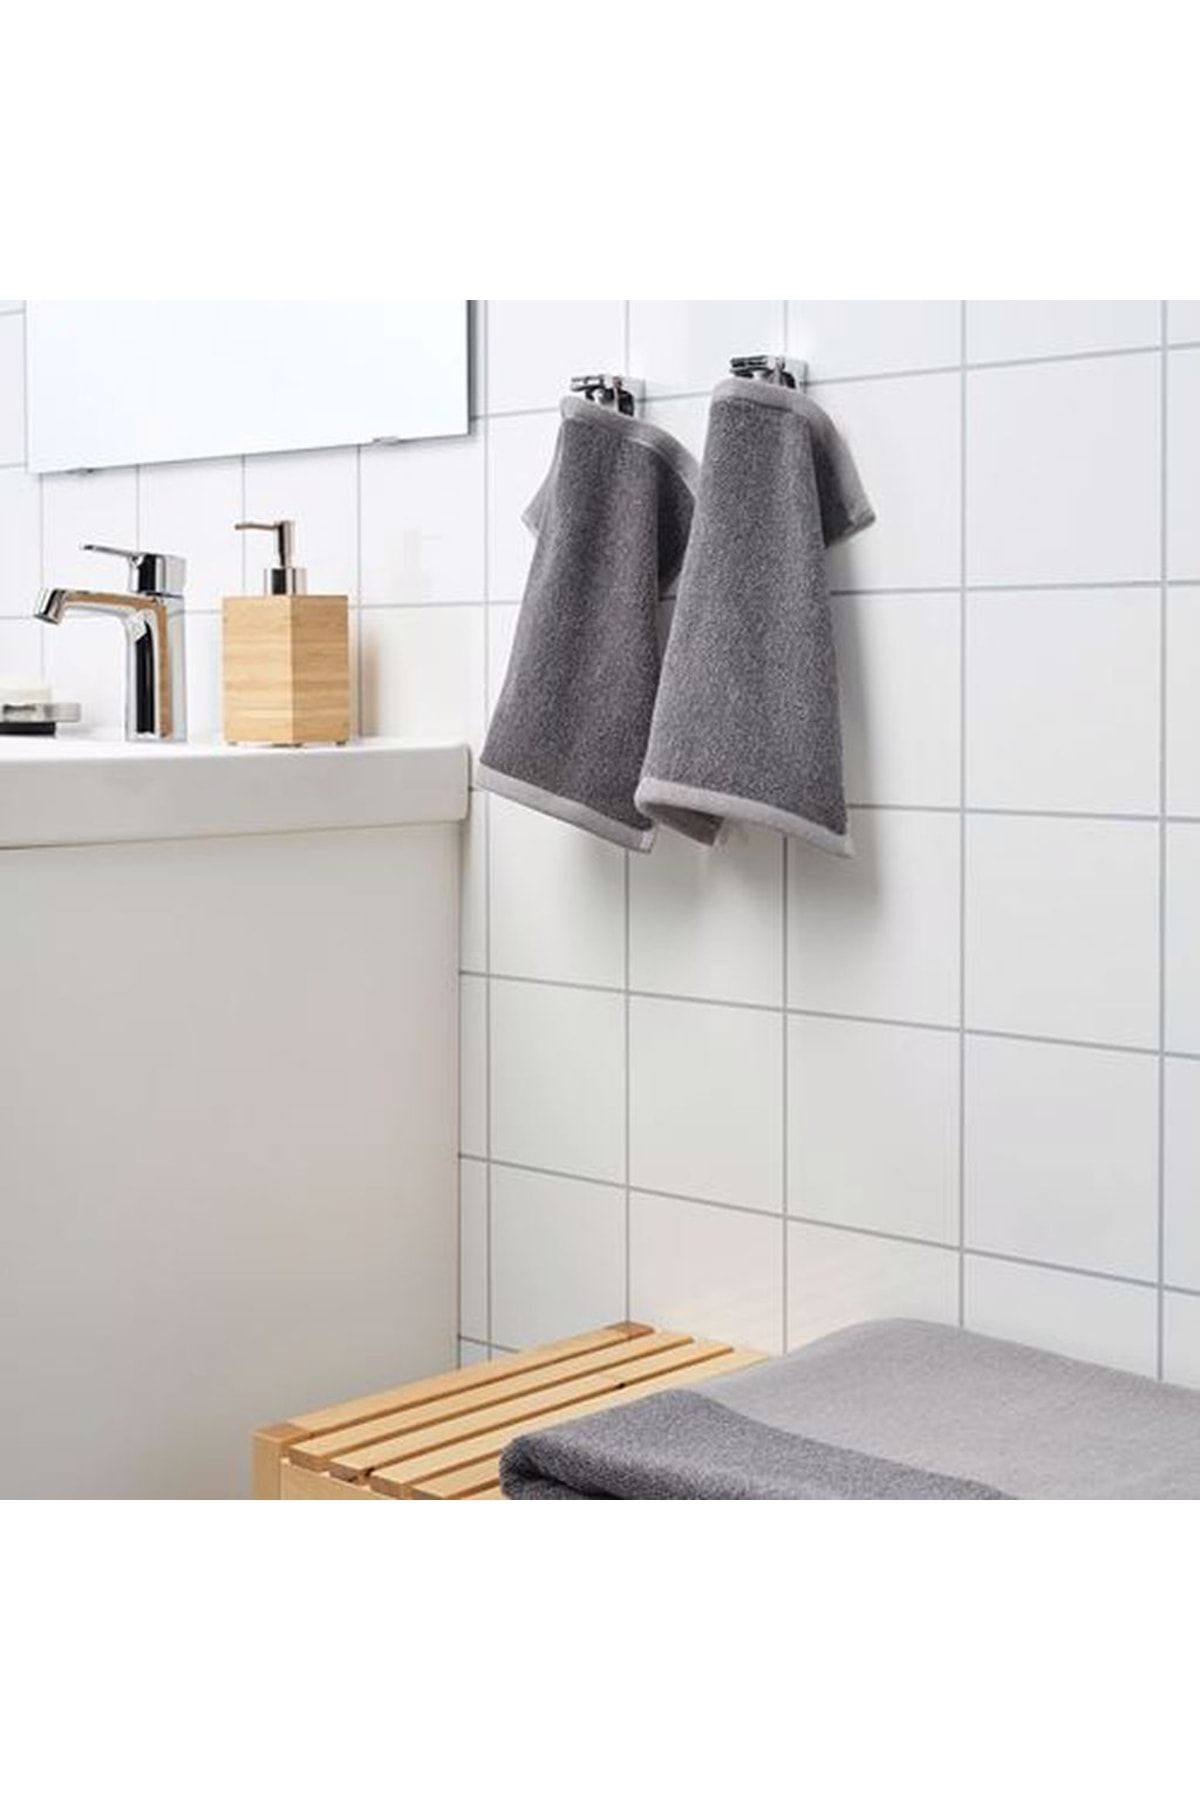 HIMLEÅN Hand towel, dark gray/mélange, 16x28 - IKEA